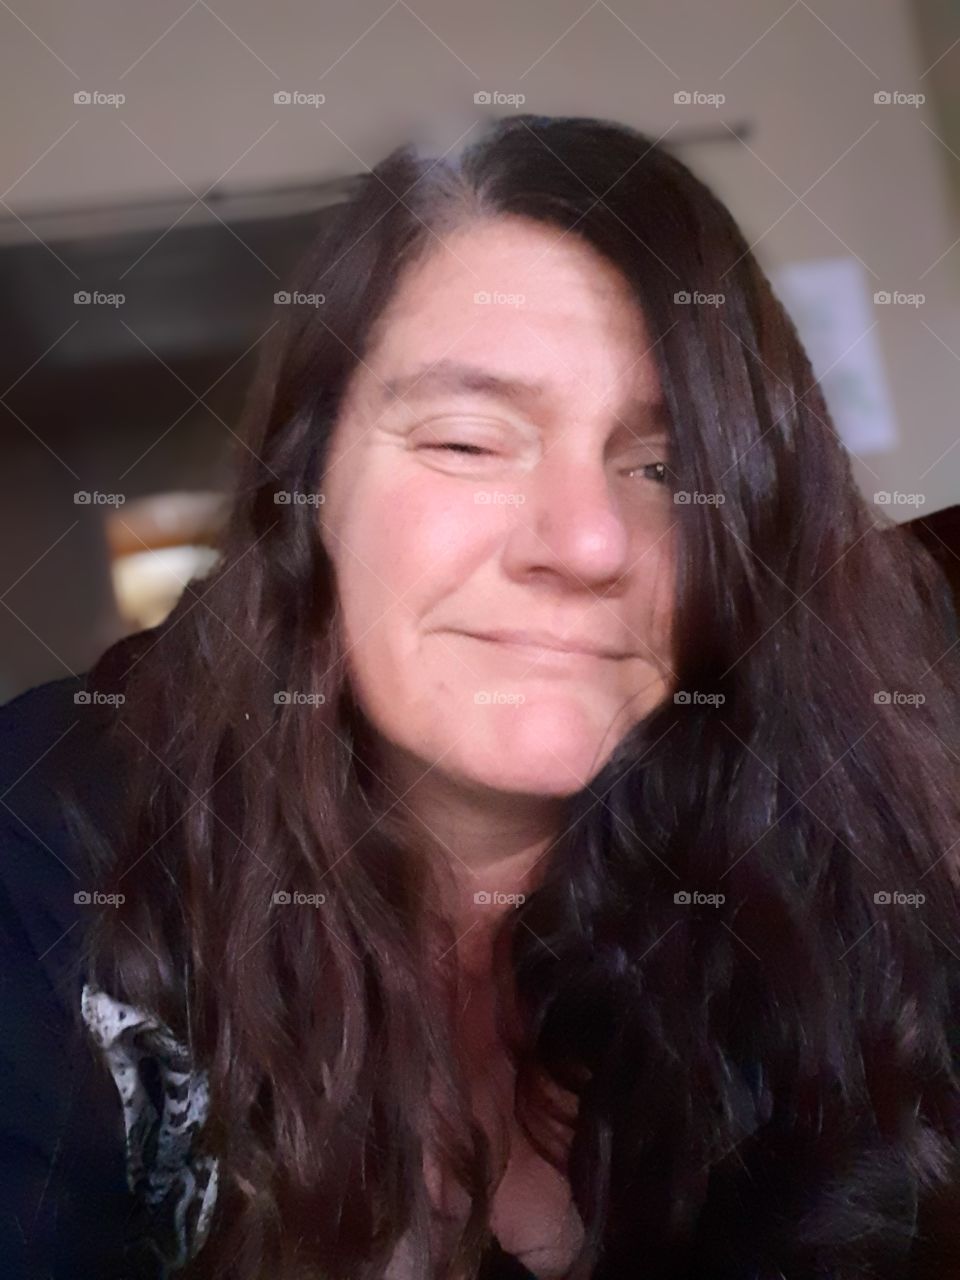 selfie of dark haired lady smiling